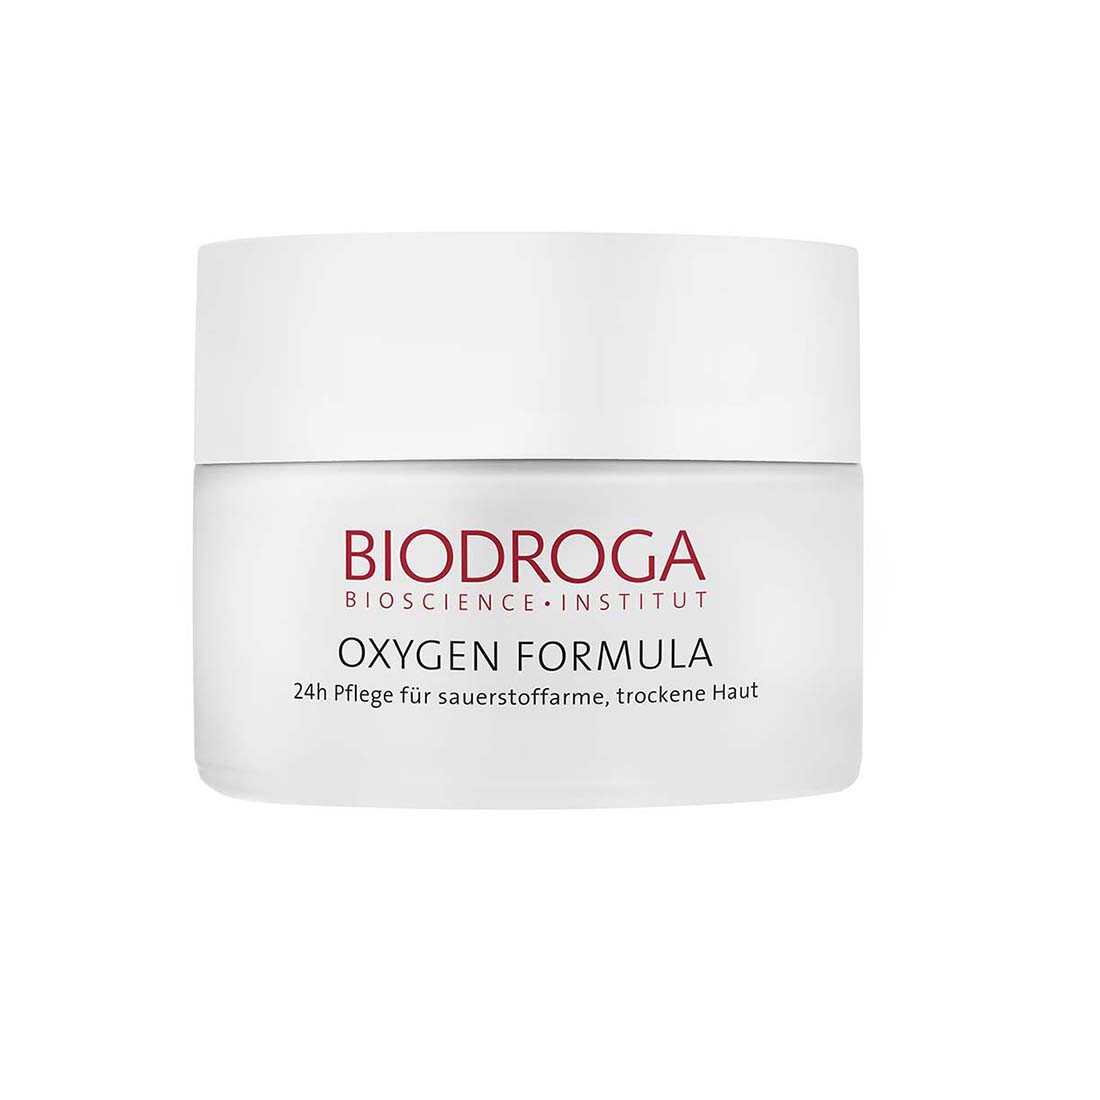 BIODROGA Oxygen Formula 24h Care sallow,dry skin